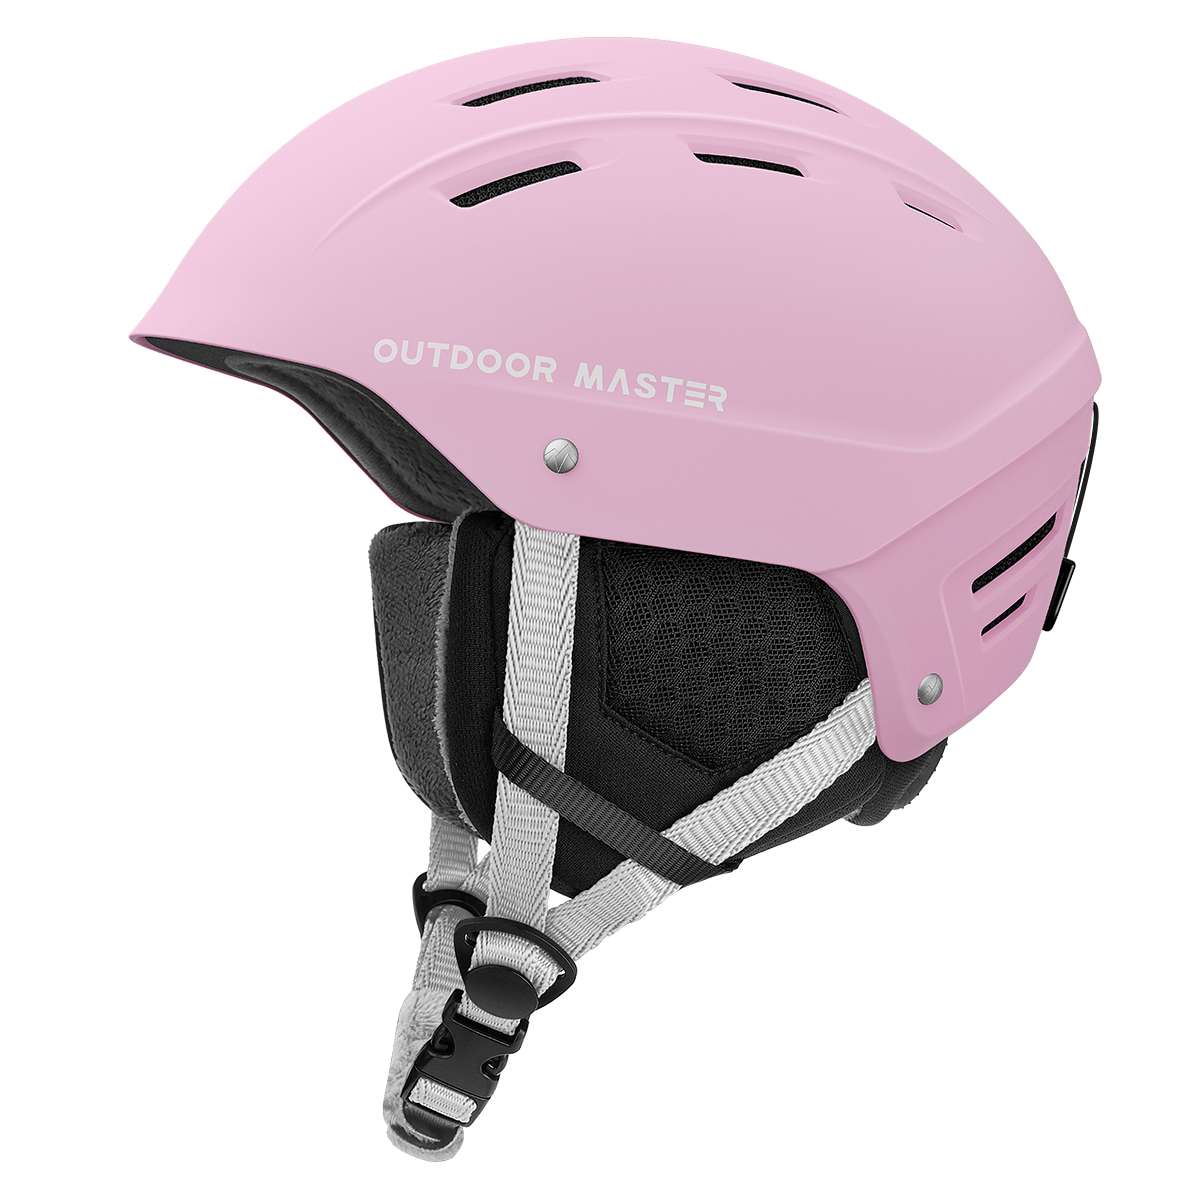 Kelvin II Ski Helmet